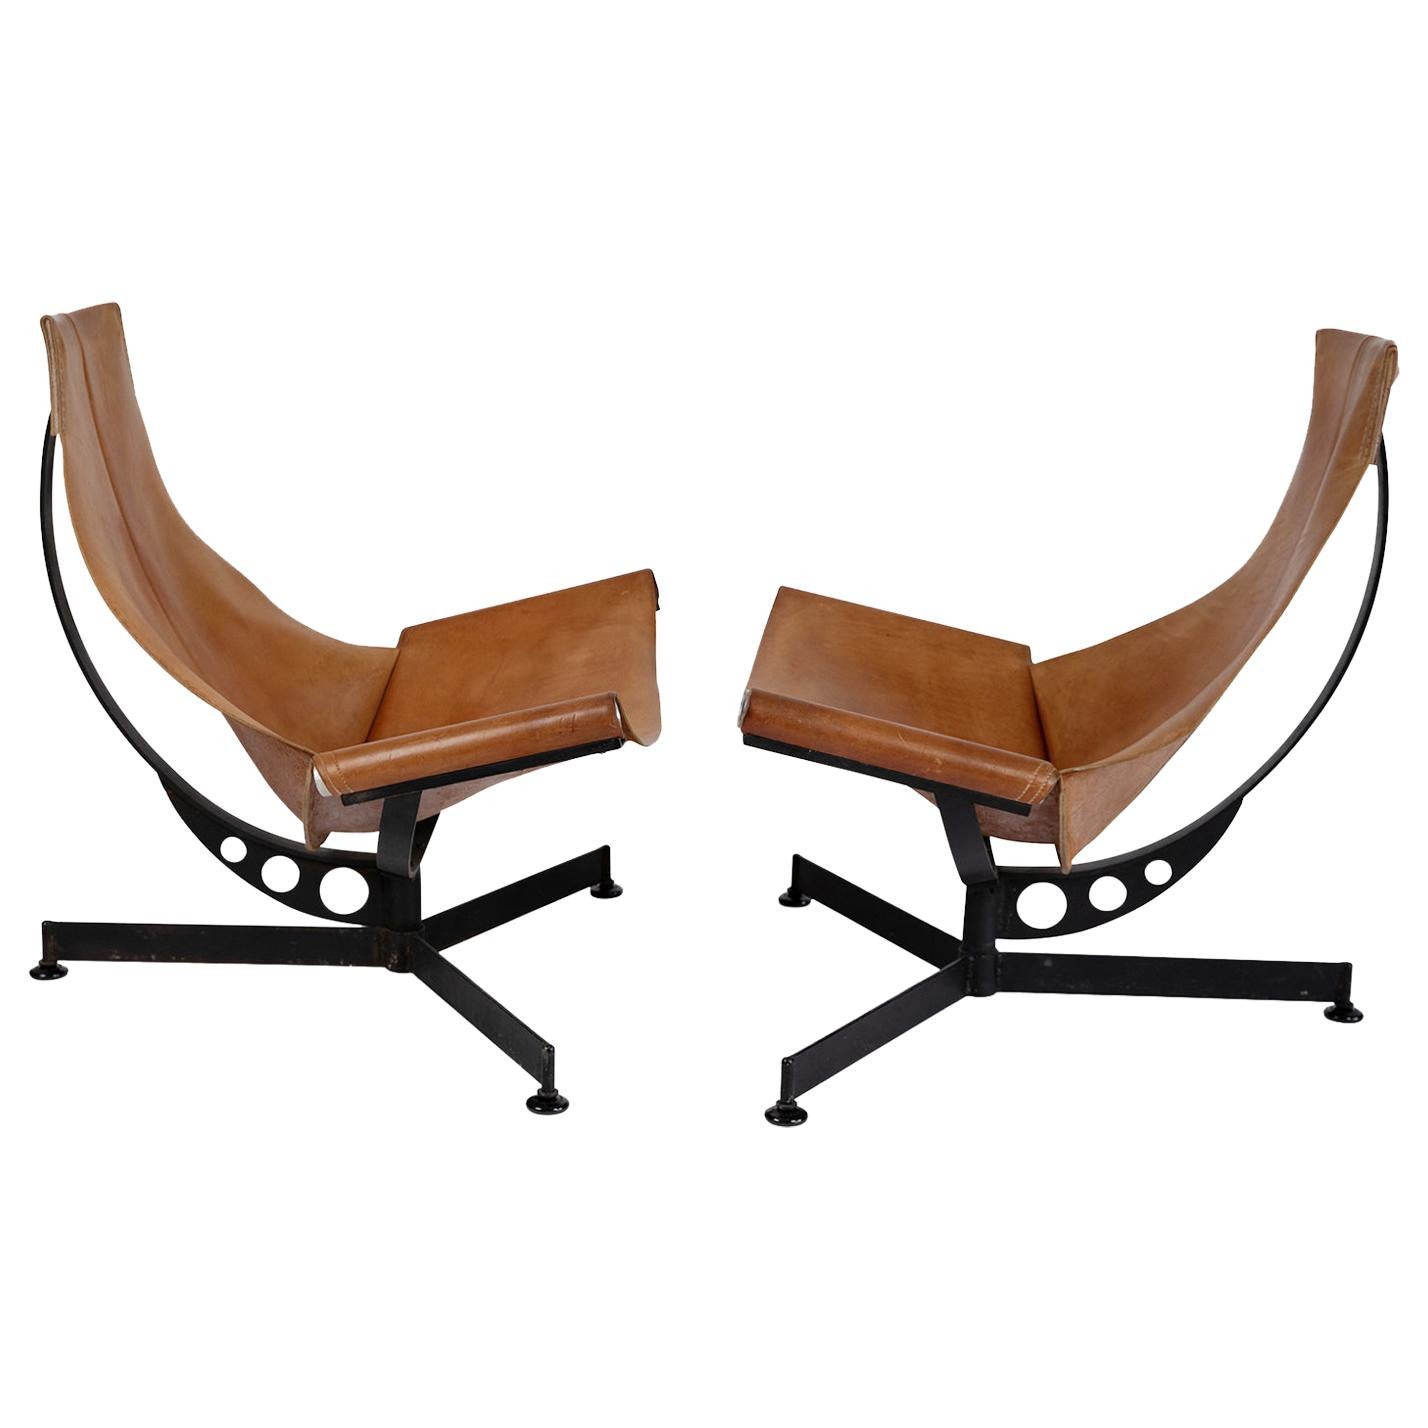 Max Gottschalk Saddle Leather & Iron Sling Chairs